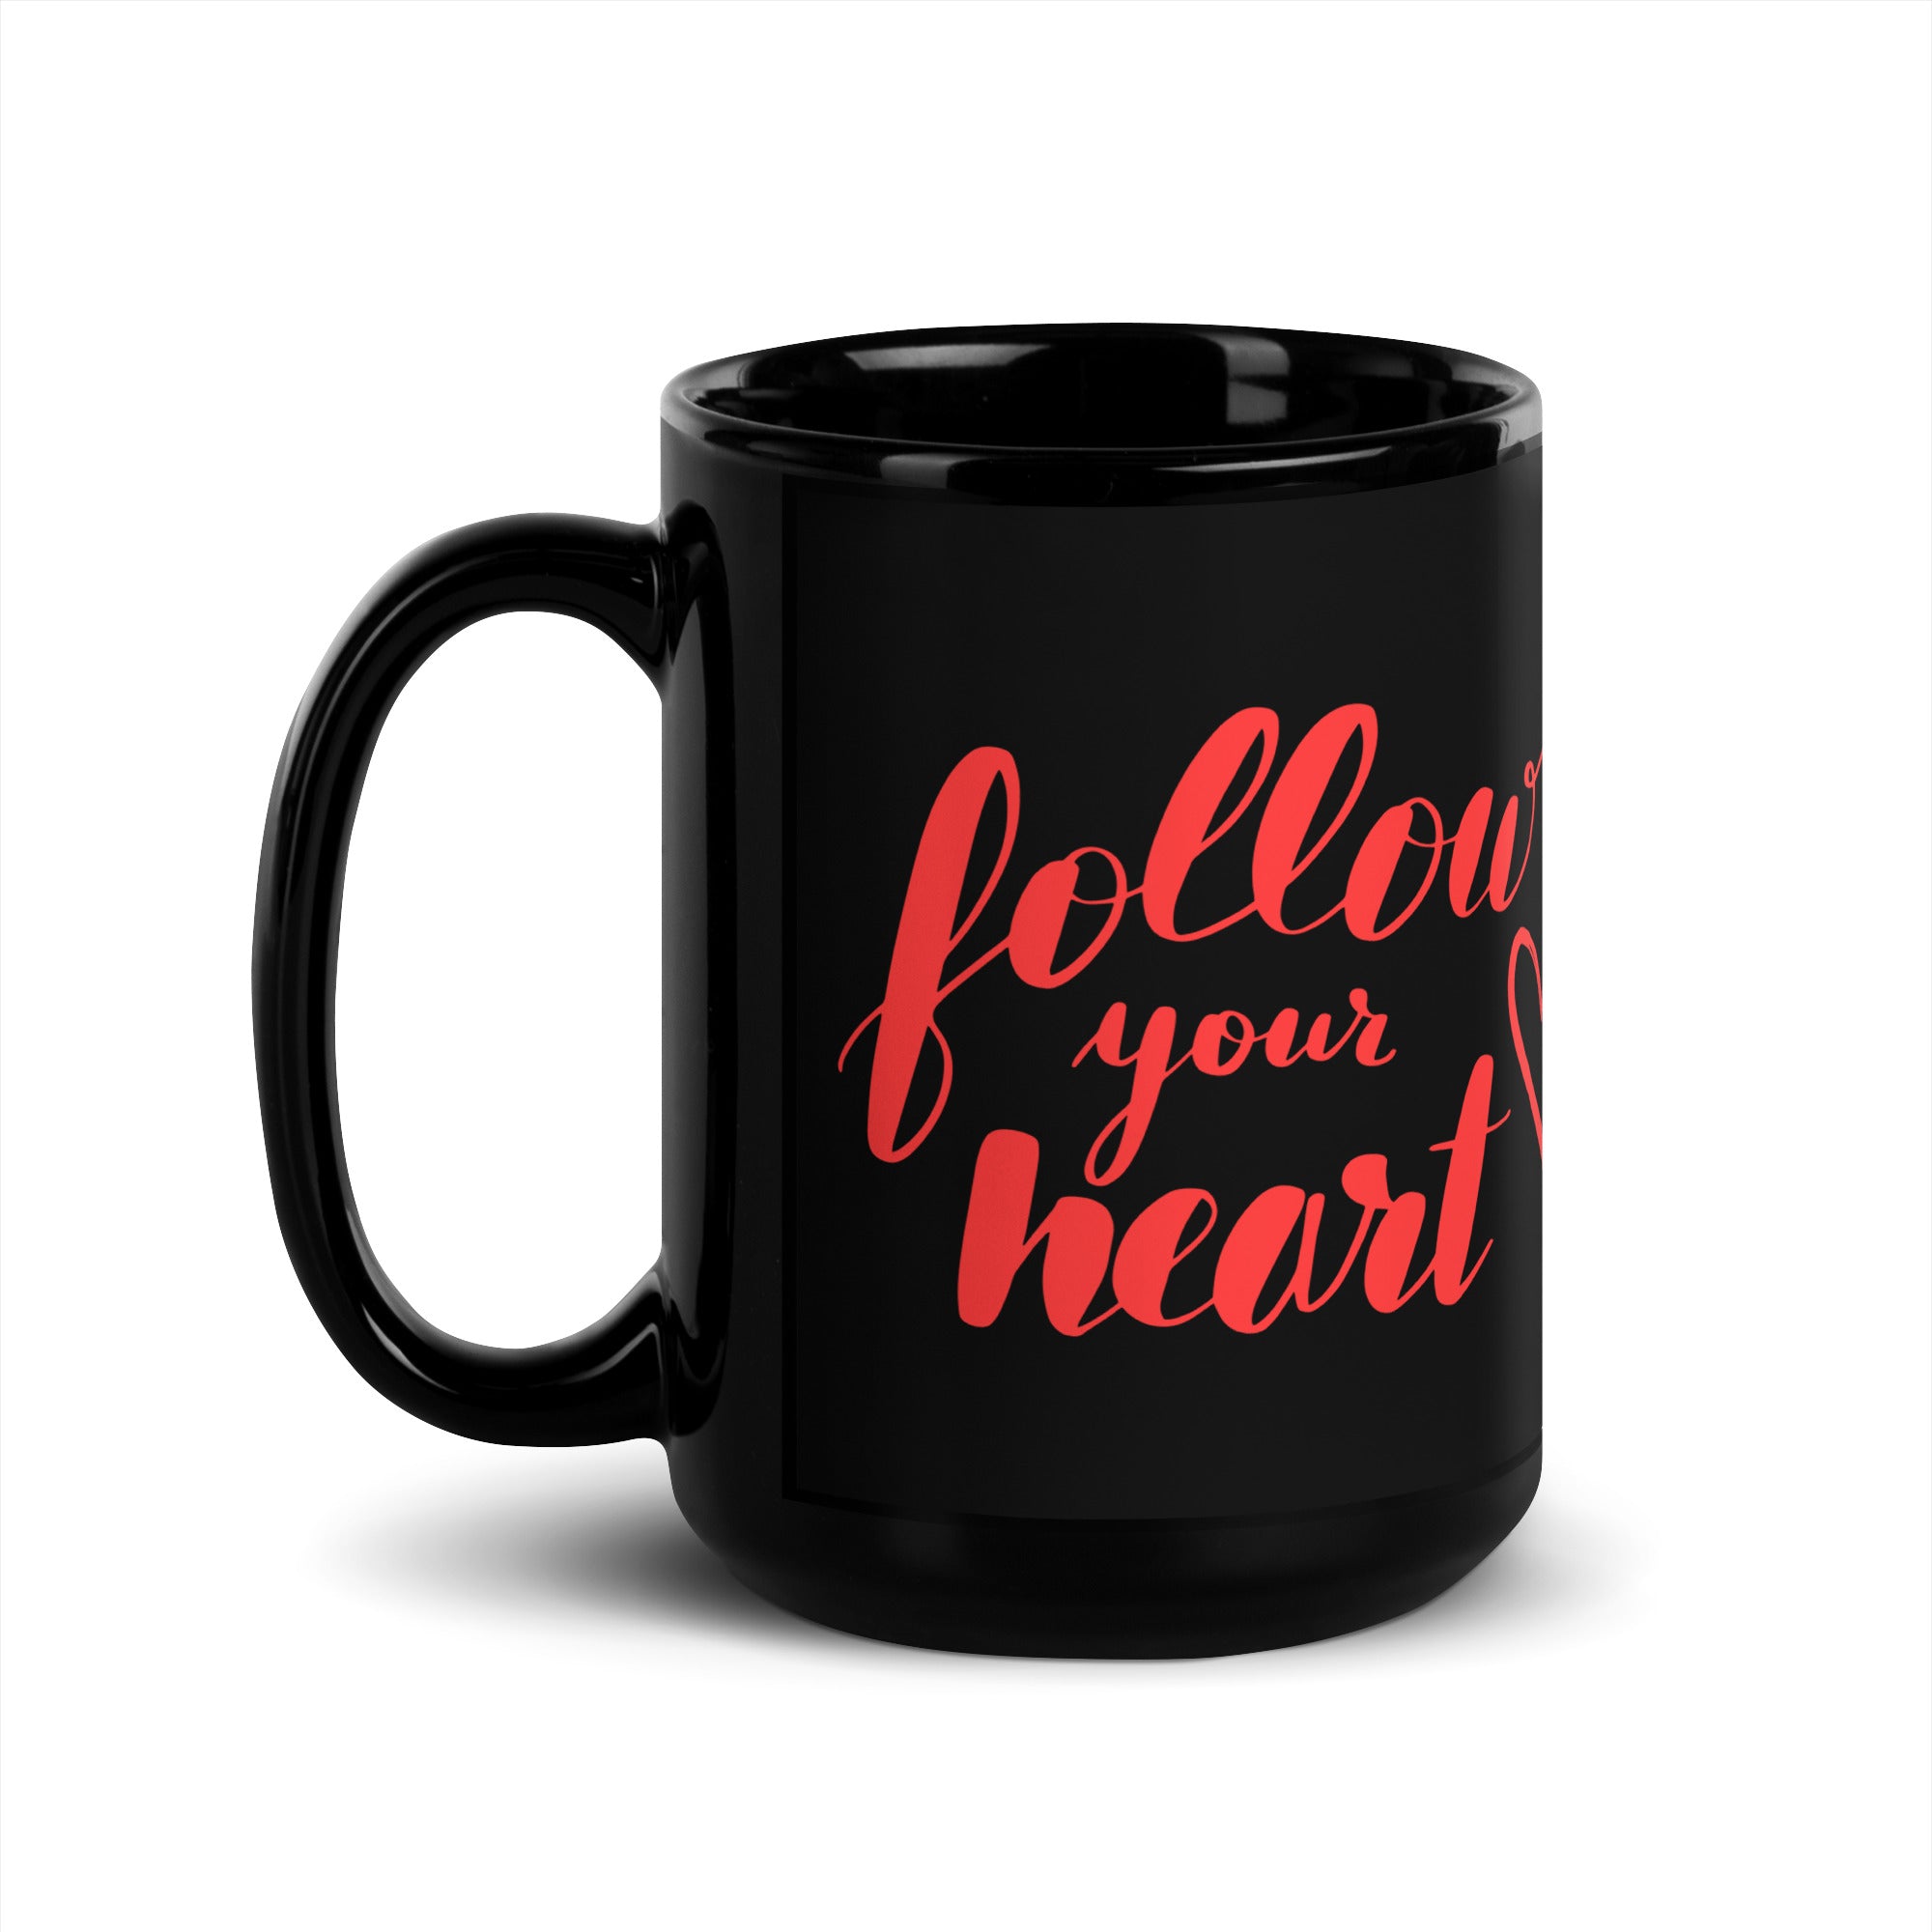 Follow Your Heart Black Glossy Mug